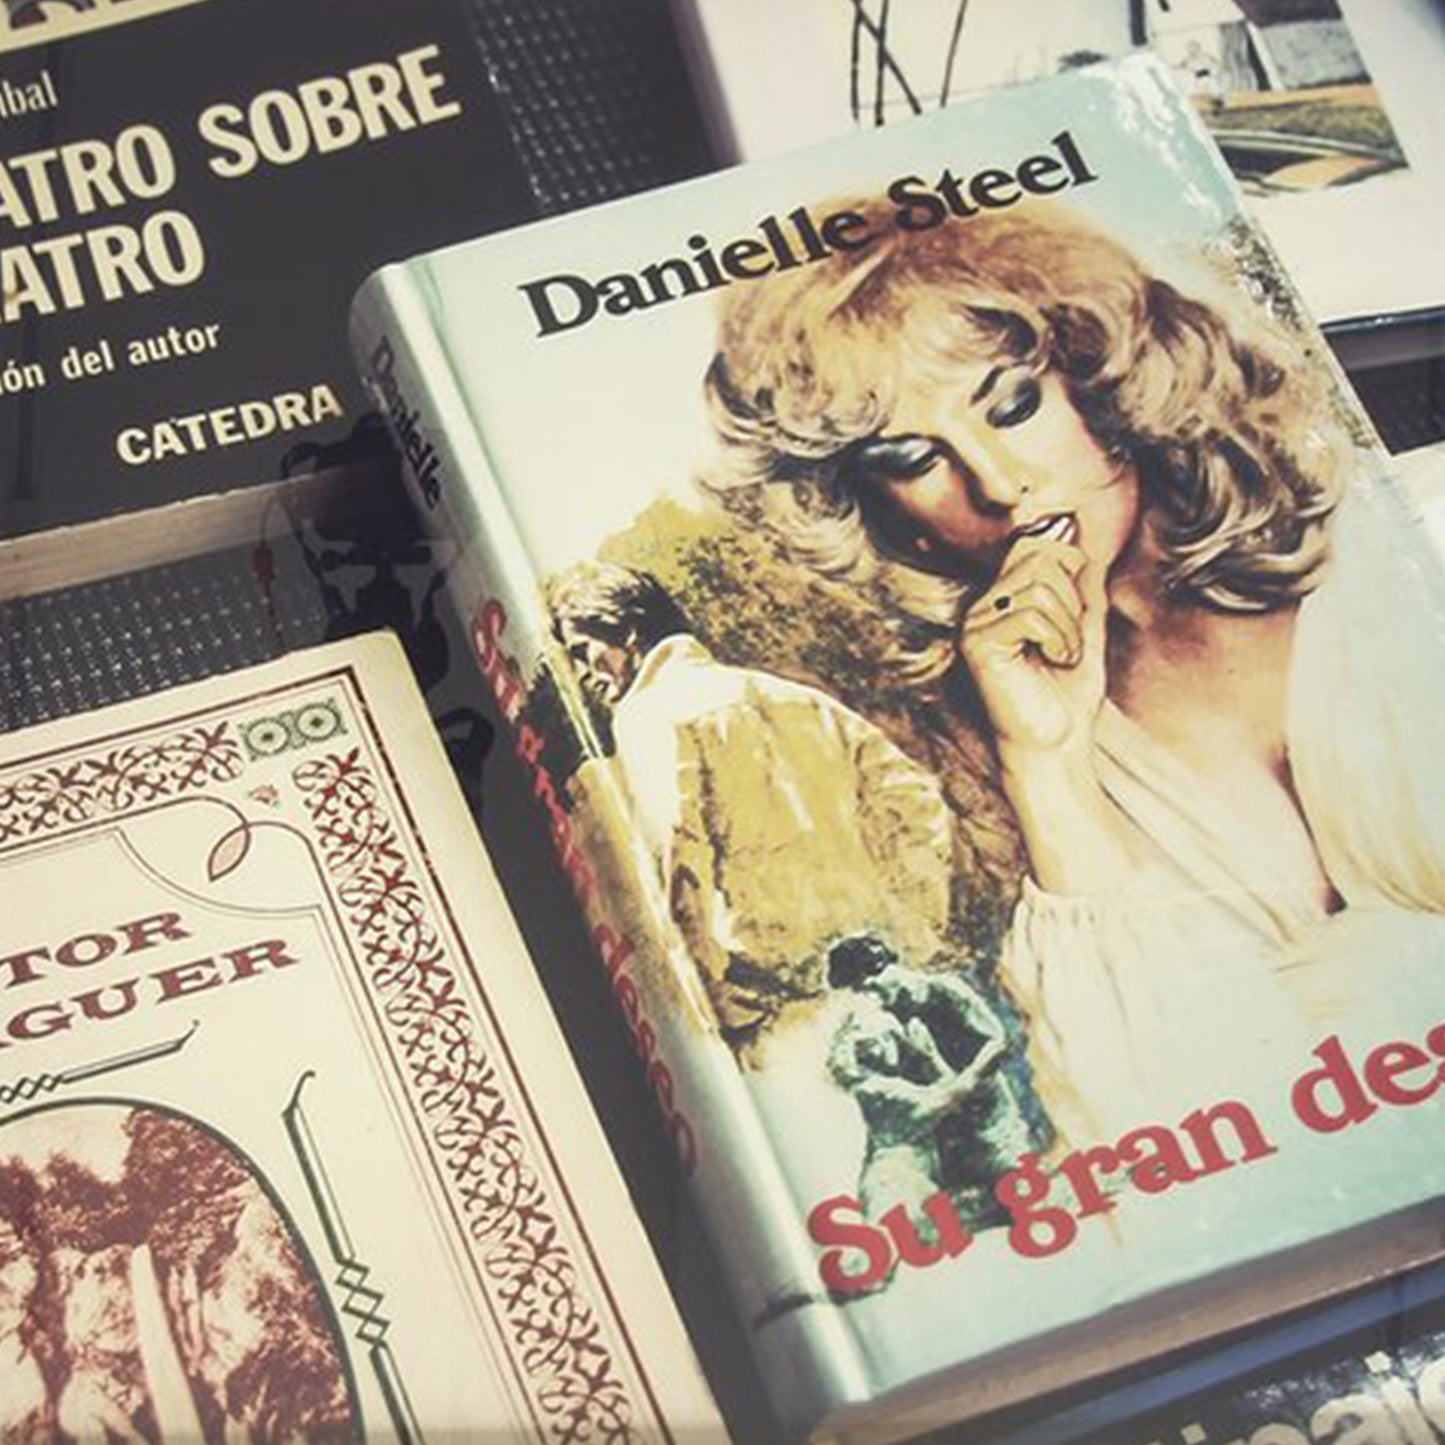 Photograph by Sara Ferguson titled Barcelona, Spain of books, such as, Danielle Steel